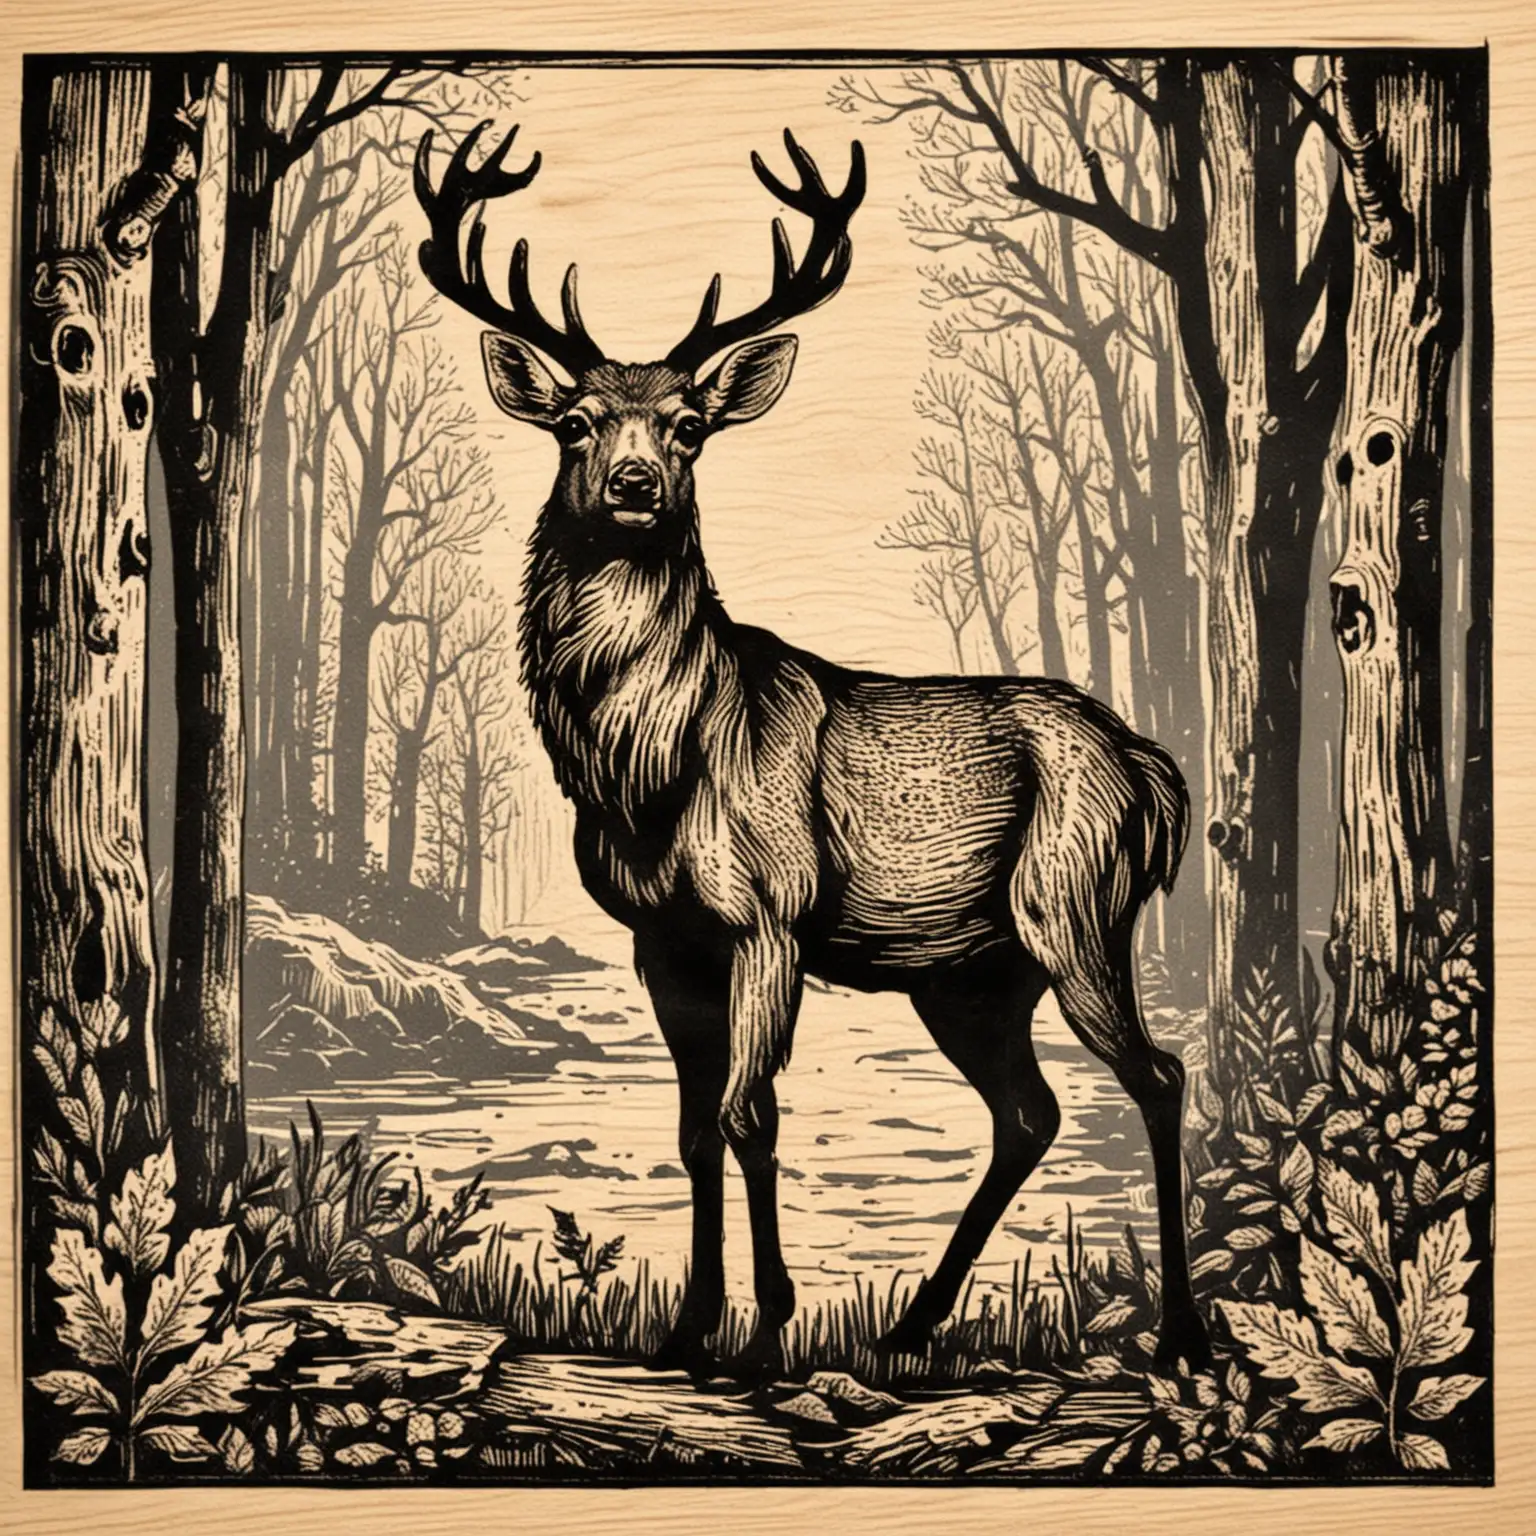 create an image of a woodcut deer